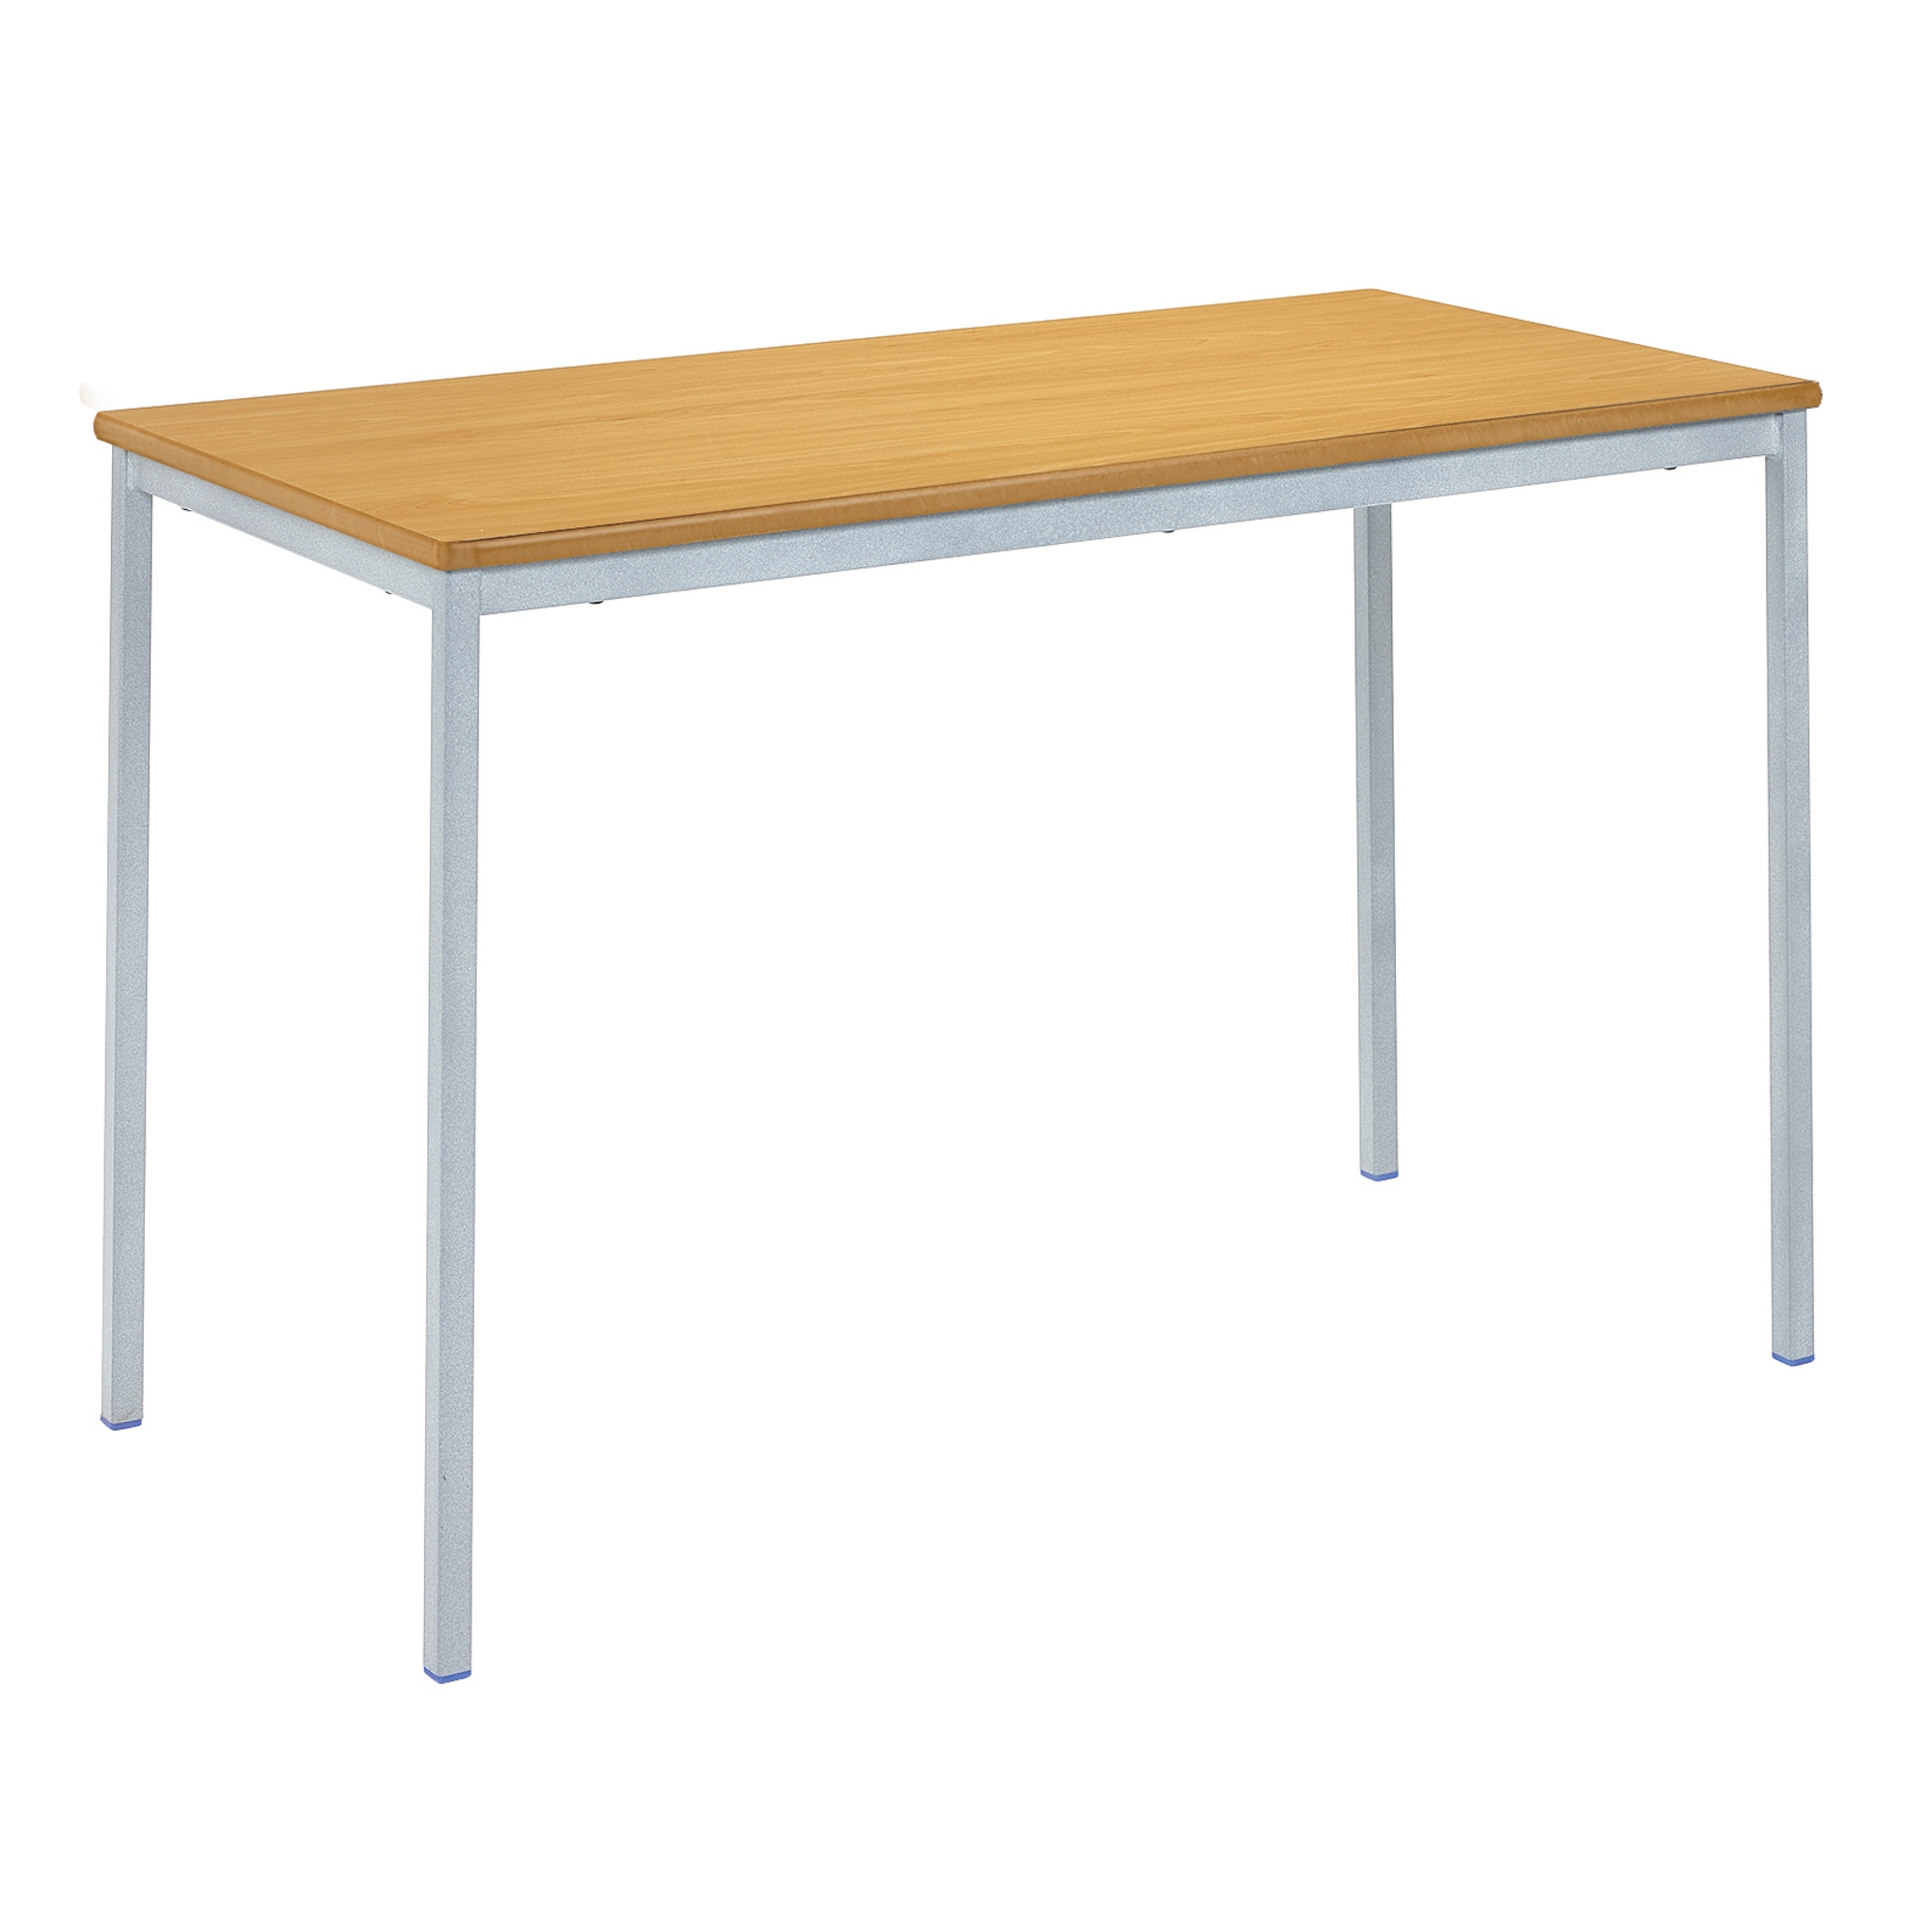 Classmates Rectangular Fully Welded Classroom Table - 1100 x 550 x 530mm - Beech